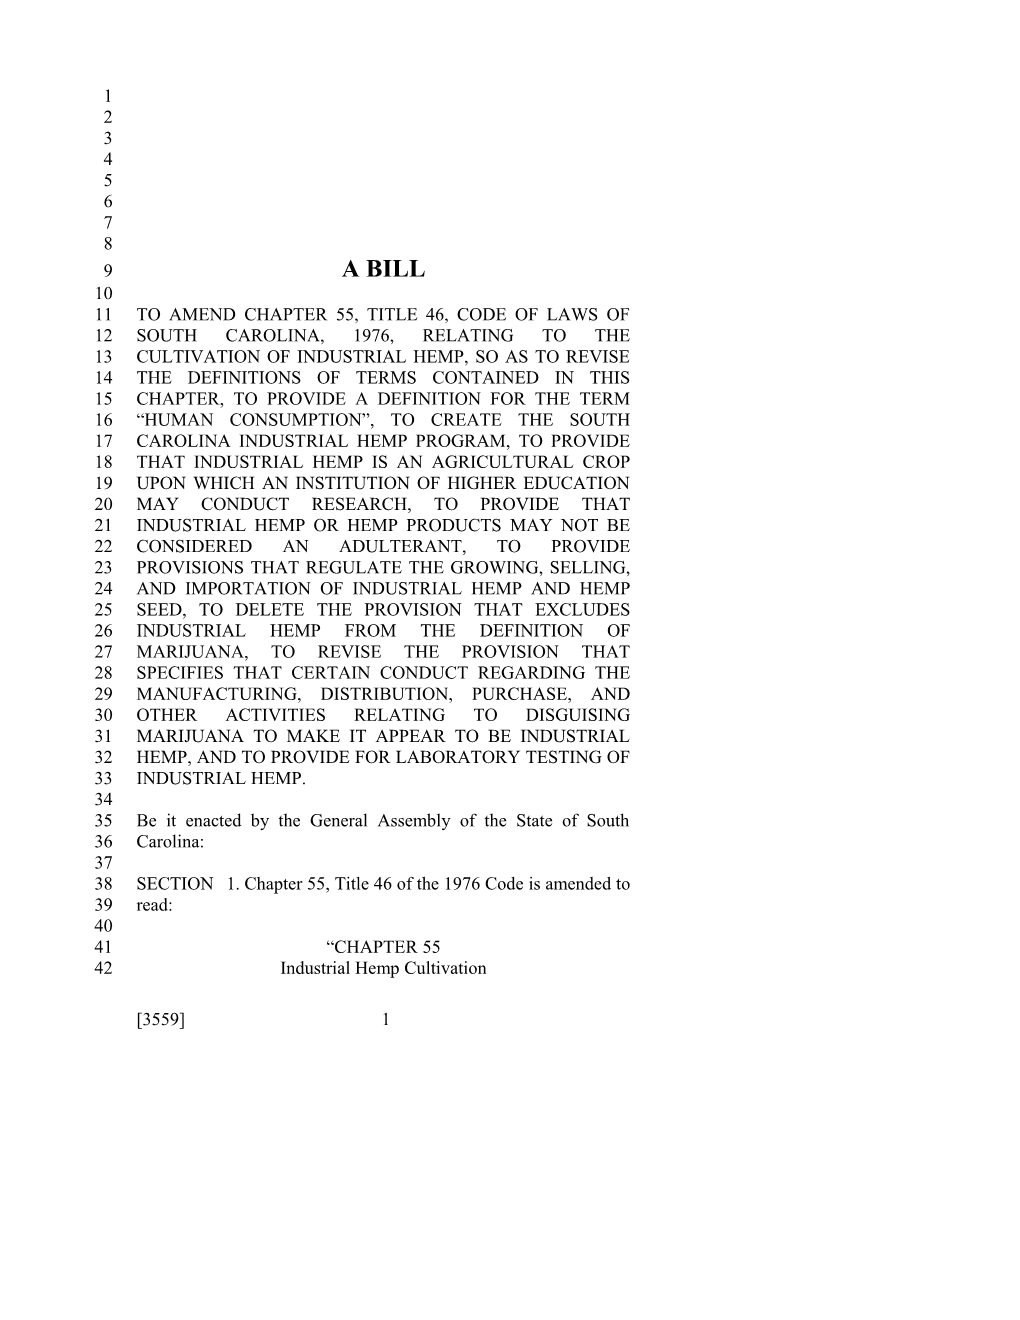 2017-2018 Bill 3559 Text of Previous Version (Jan. 24, 2017) - South Carolina Legislature Online